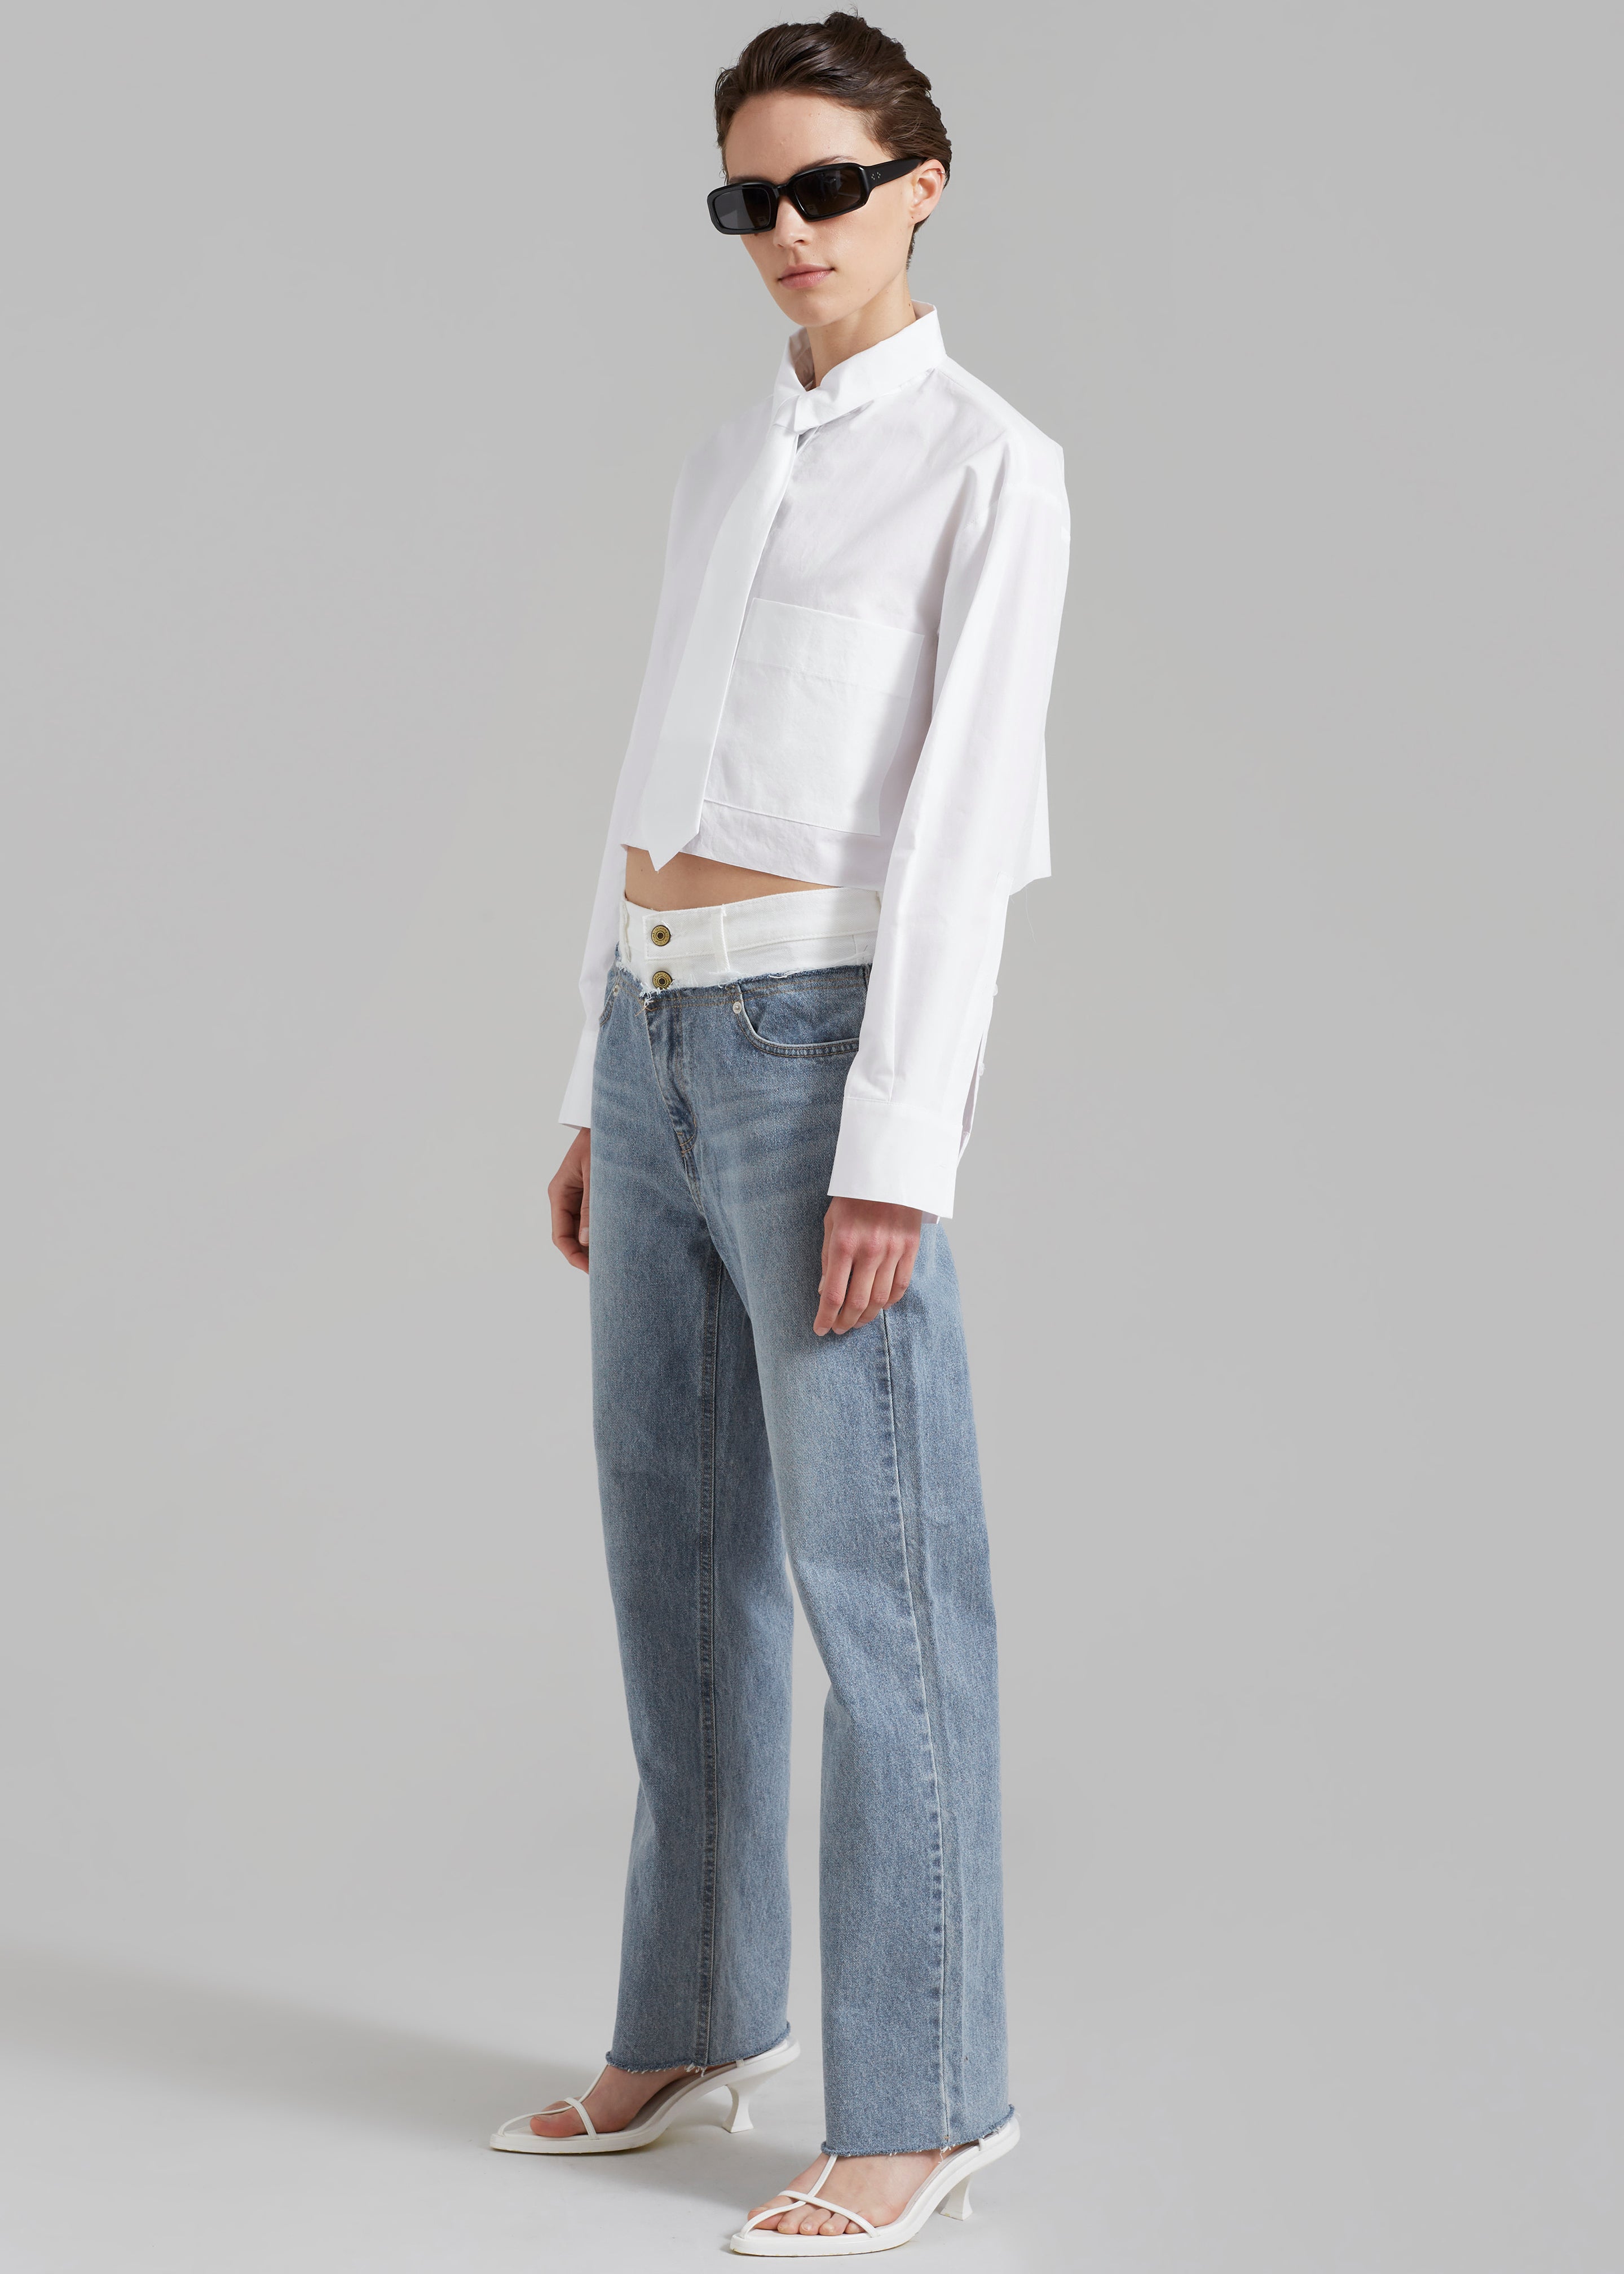 Elijah Contrast Jeans - White/Worn Wash - 8